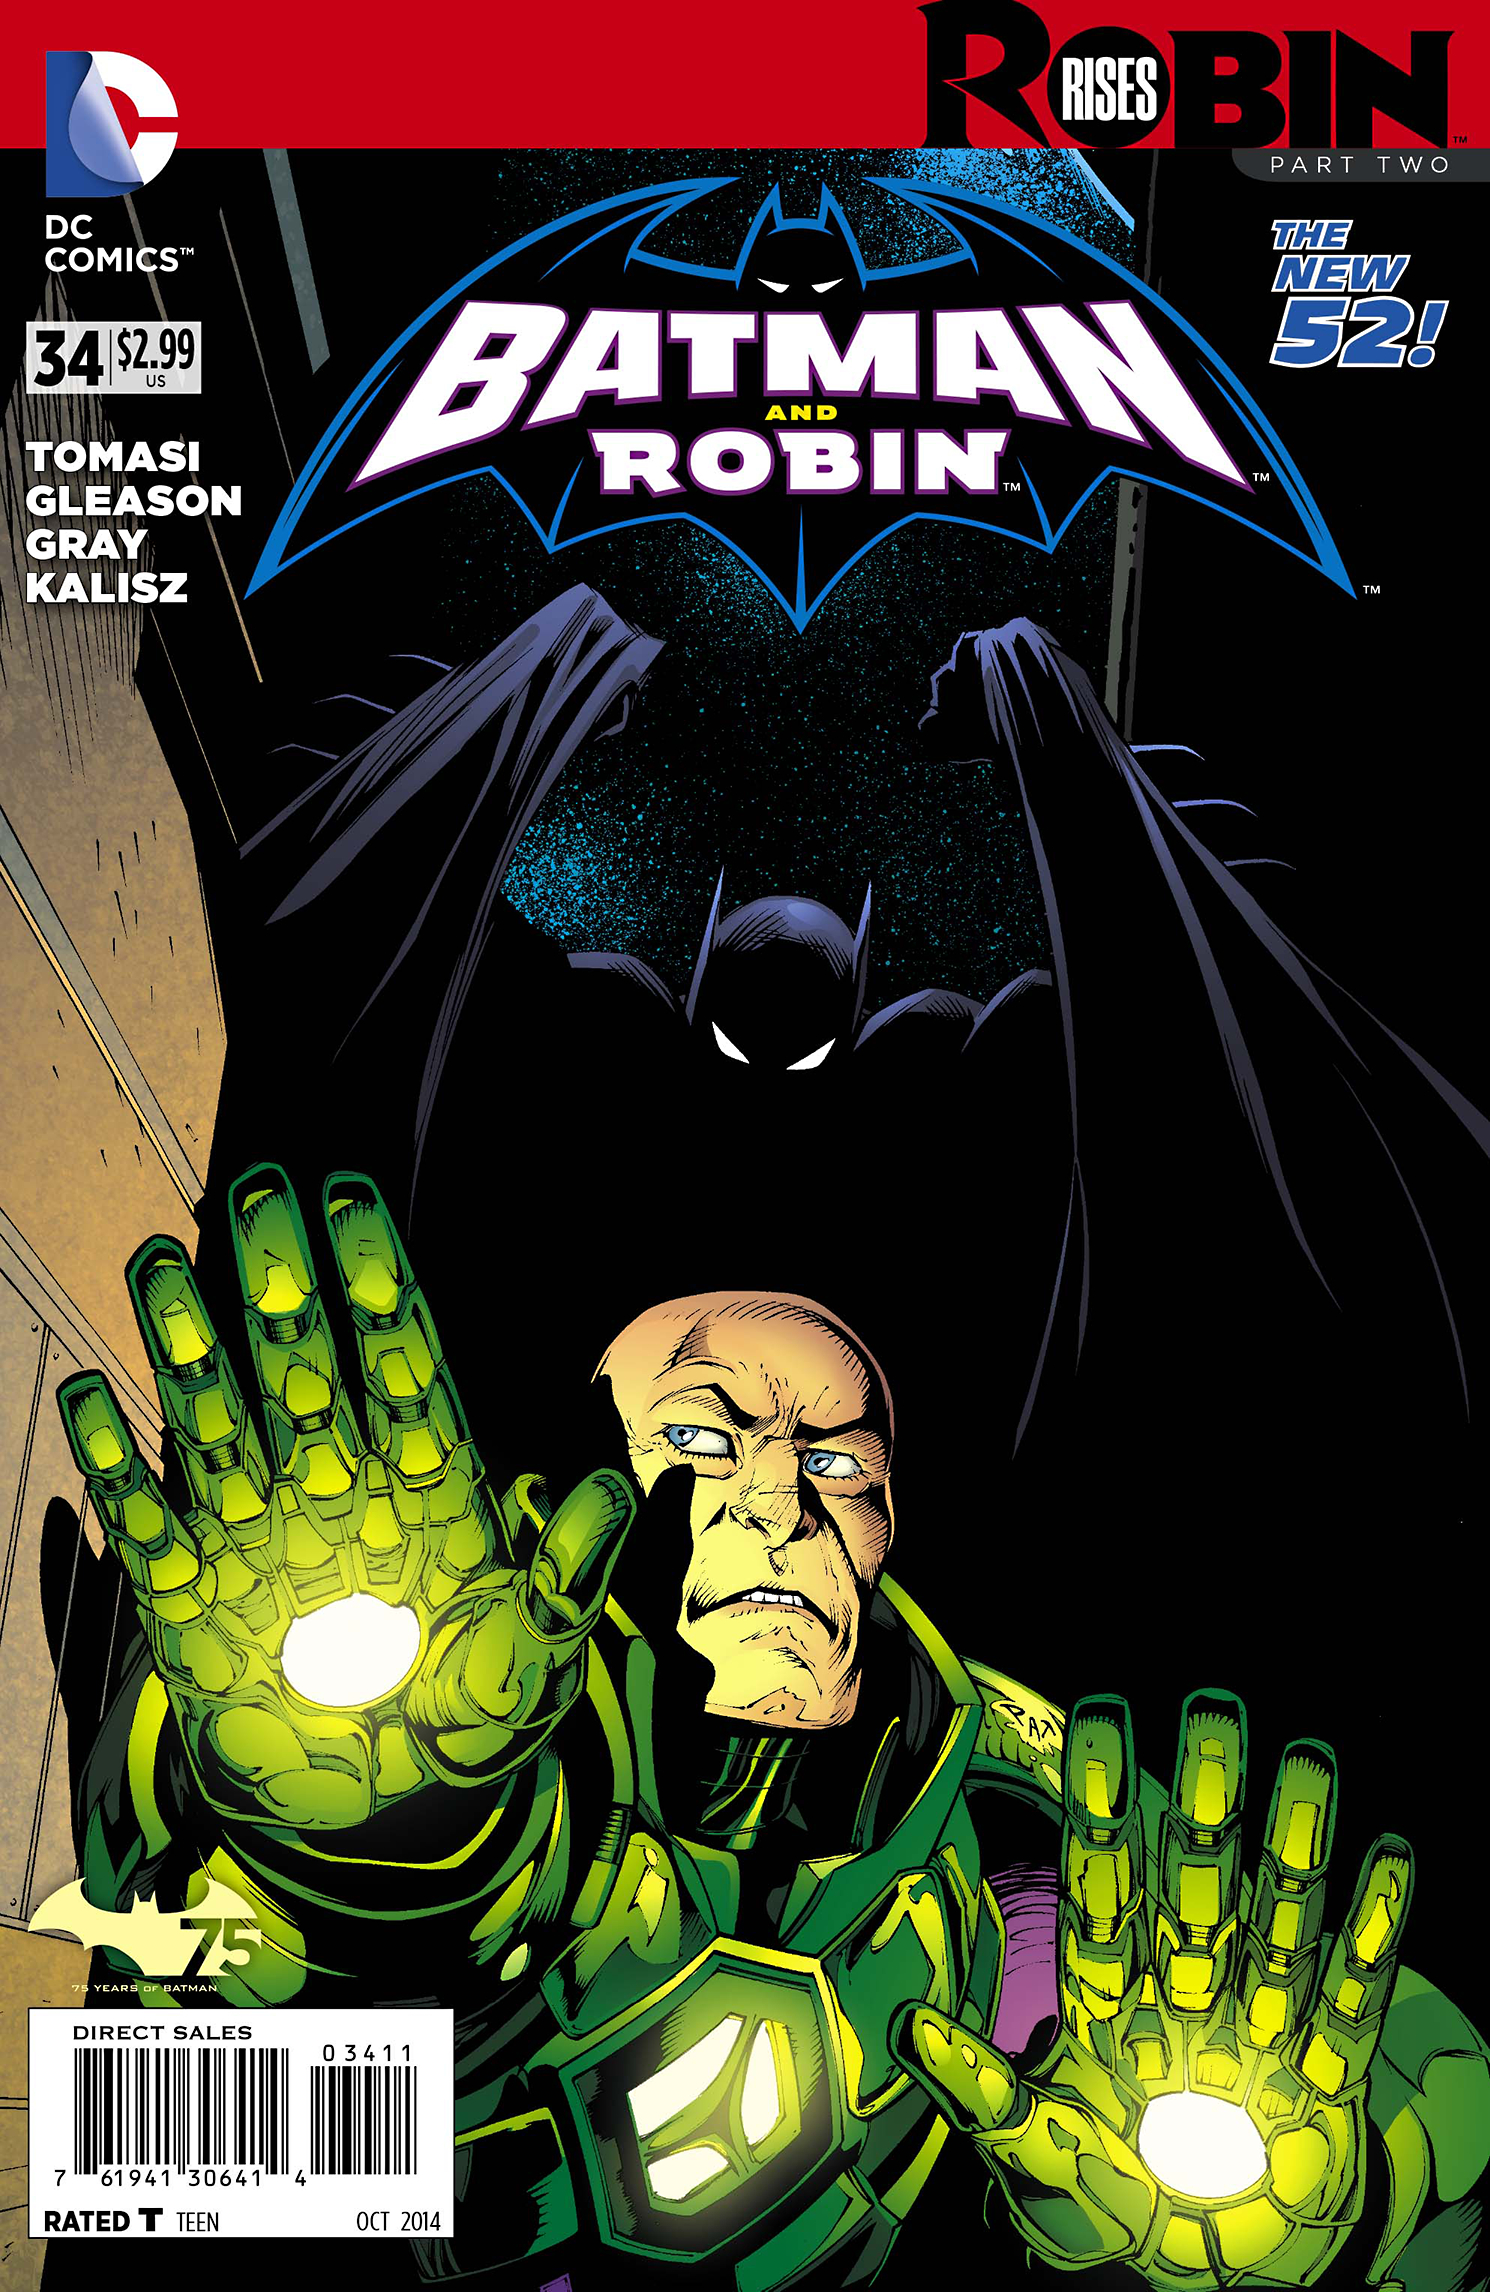 BATMAN AND ROBIN #34 (ROBIN RISES)